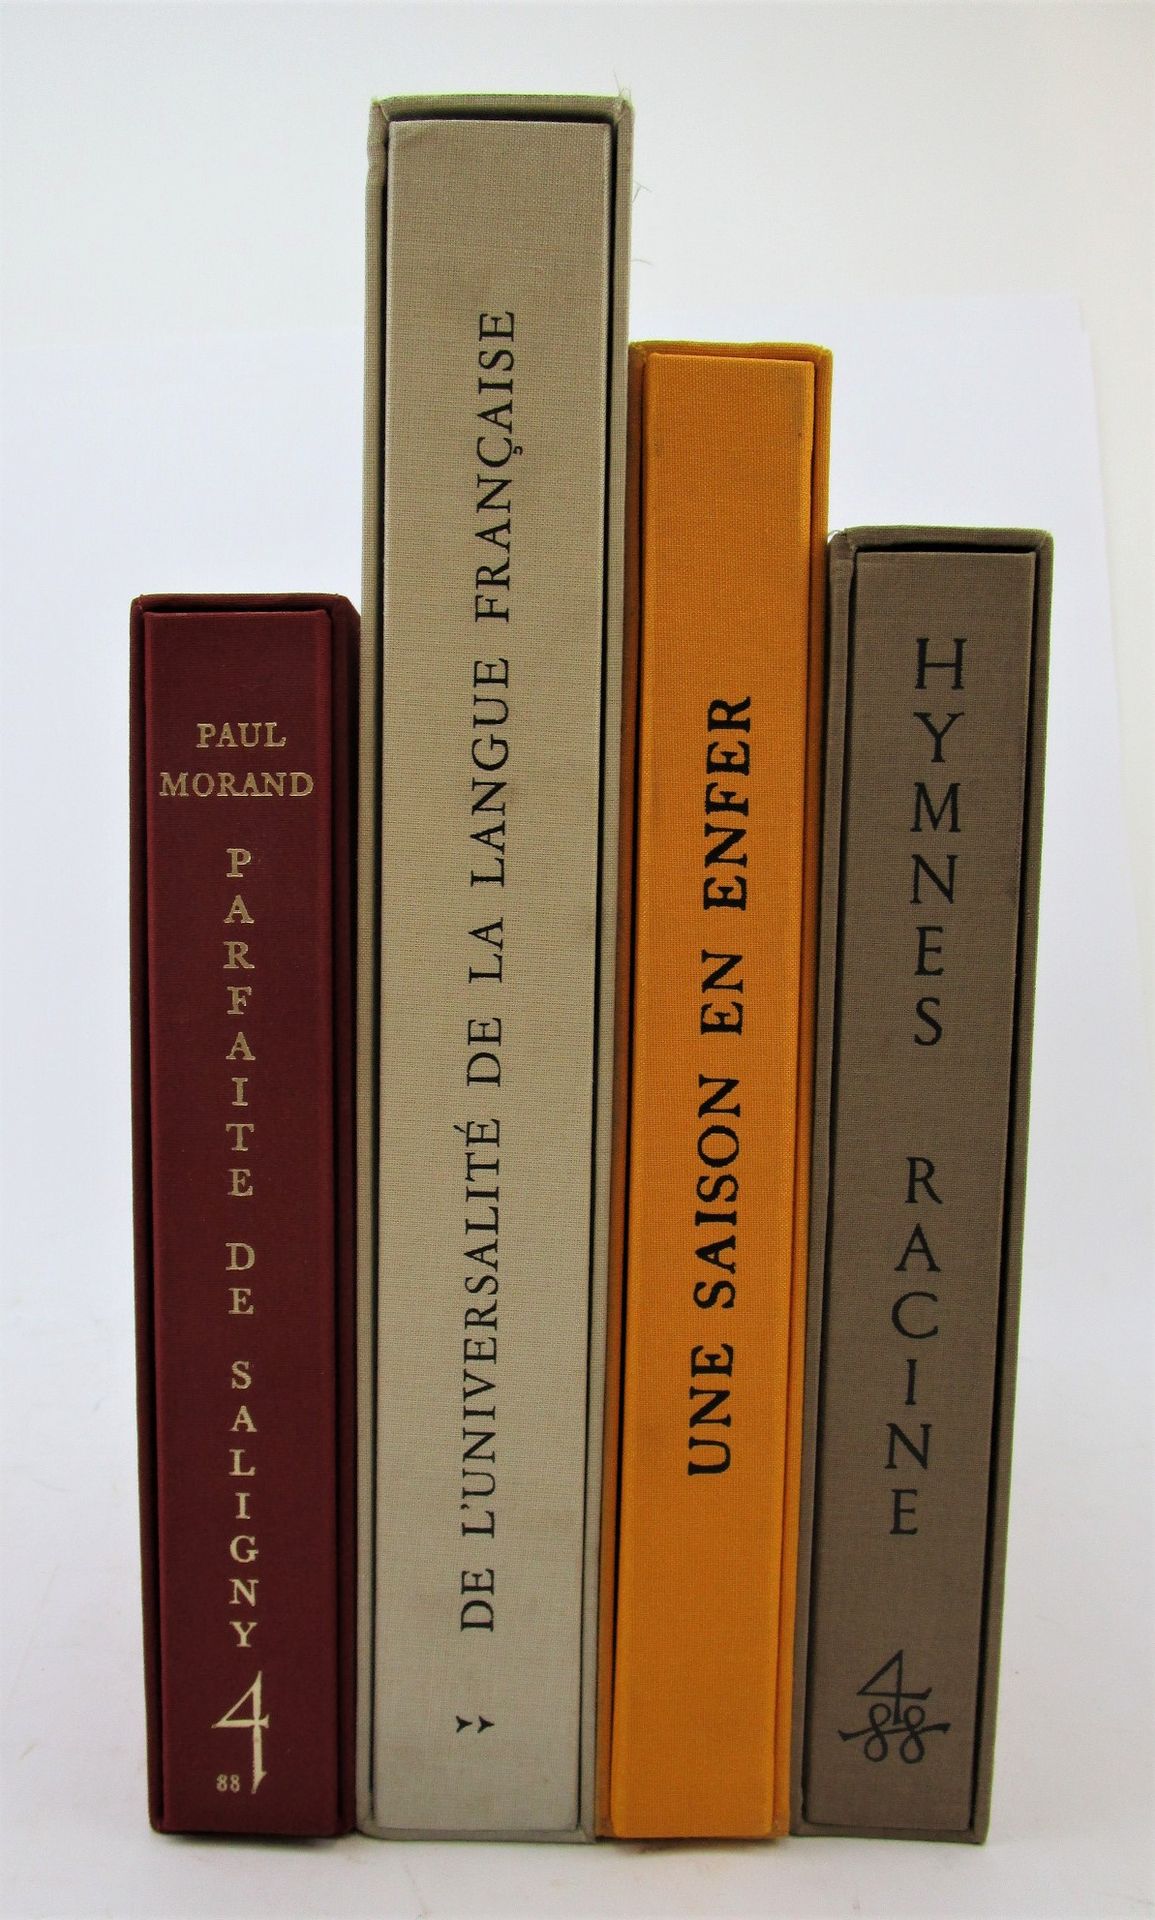 Null (La Compagnie Typographique) - Set of 4 volumes.
1/Morand, Paul. - Parfaite&hellip;